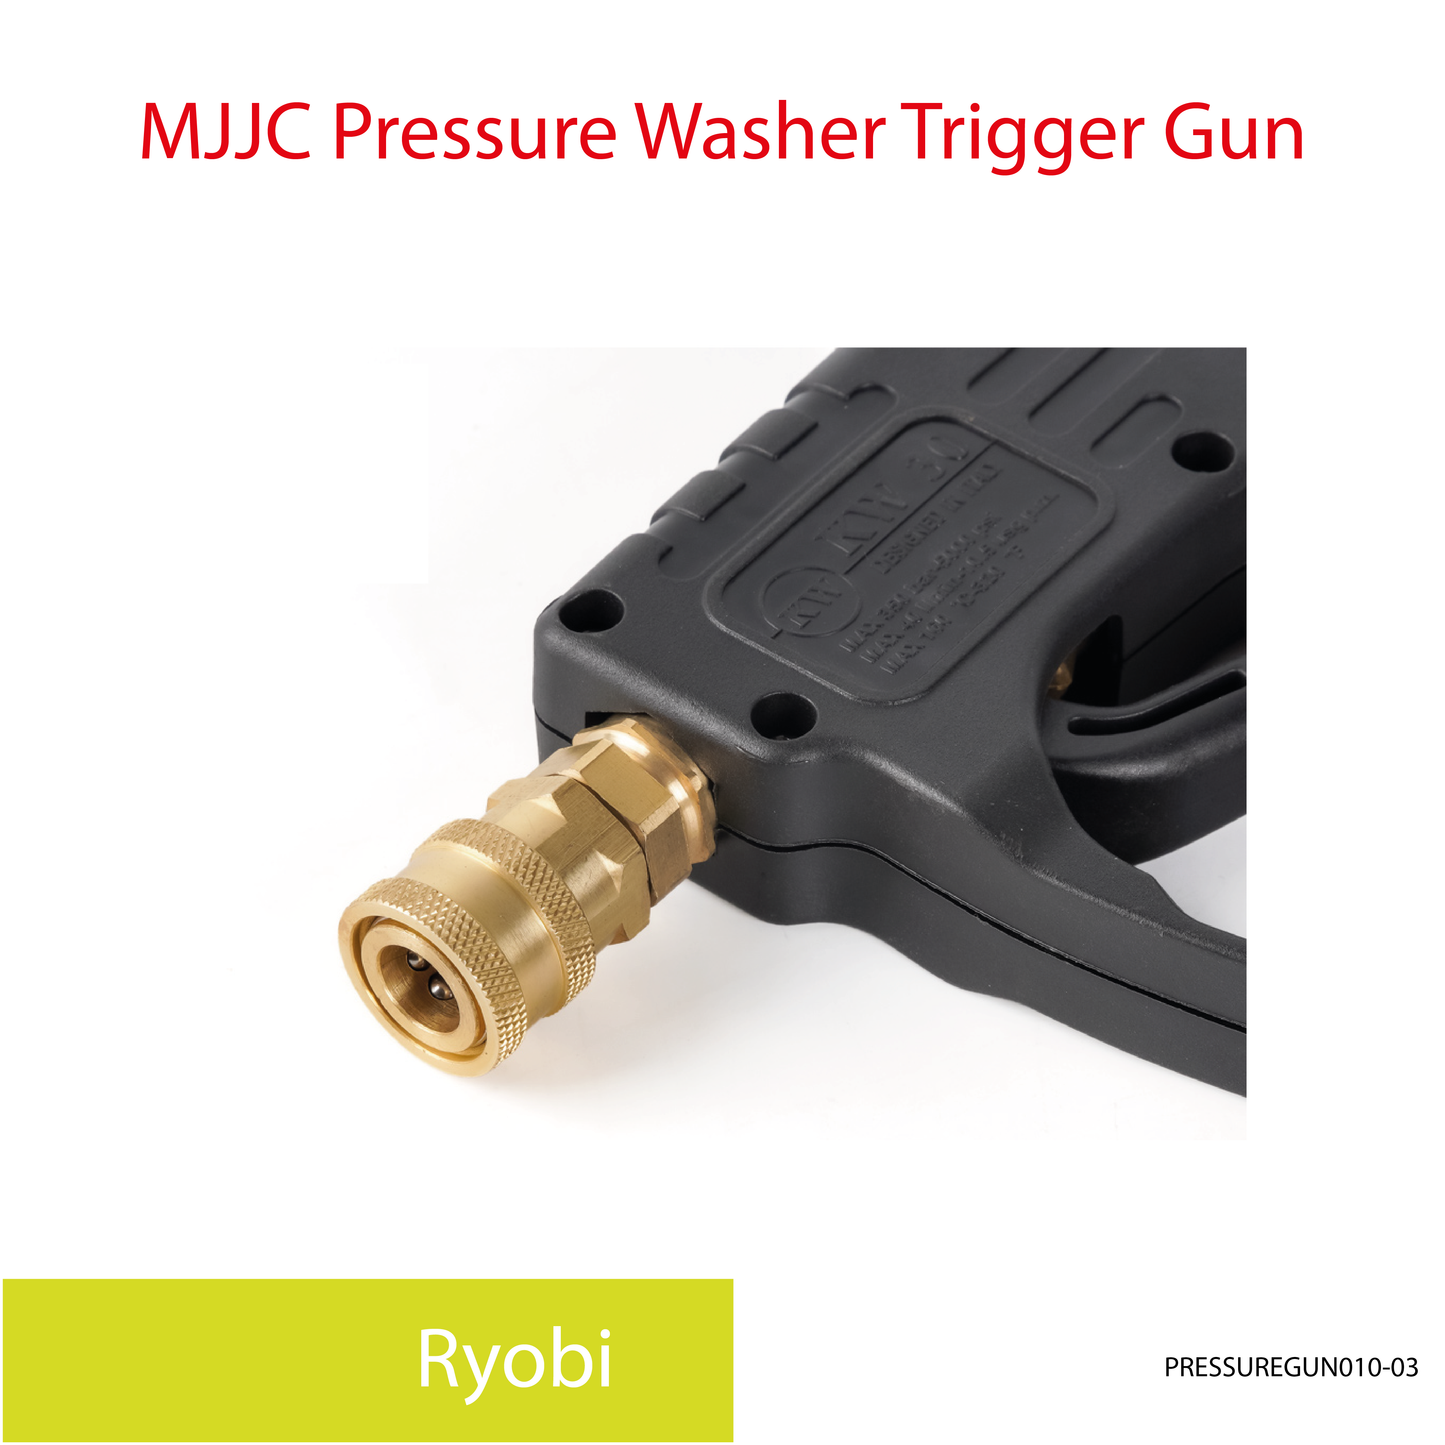 Ryobi - MJJC Light Weight Pressure Washer Trigger Spray Gun with Live Swivel